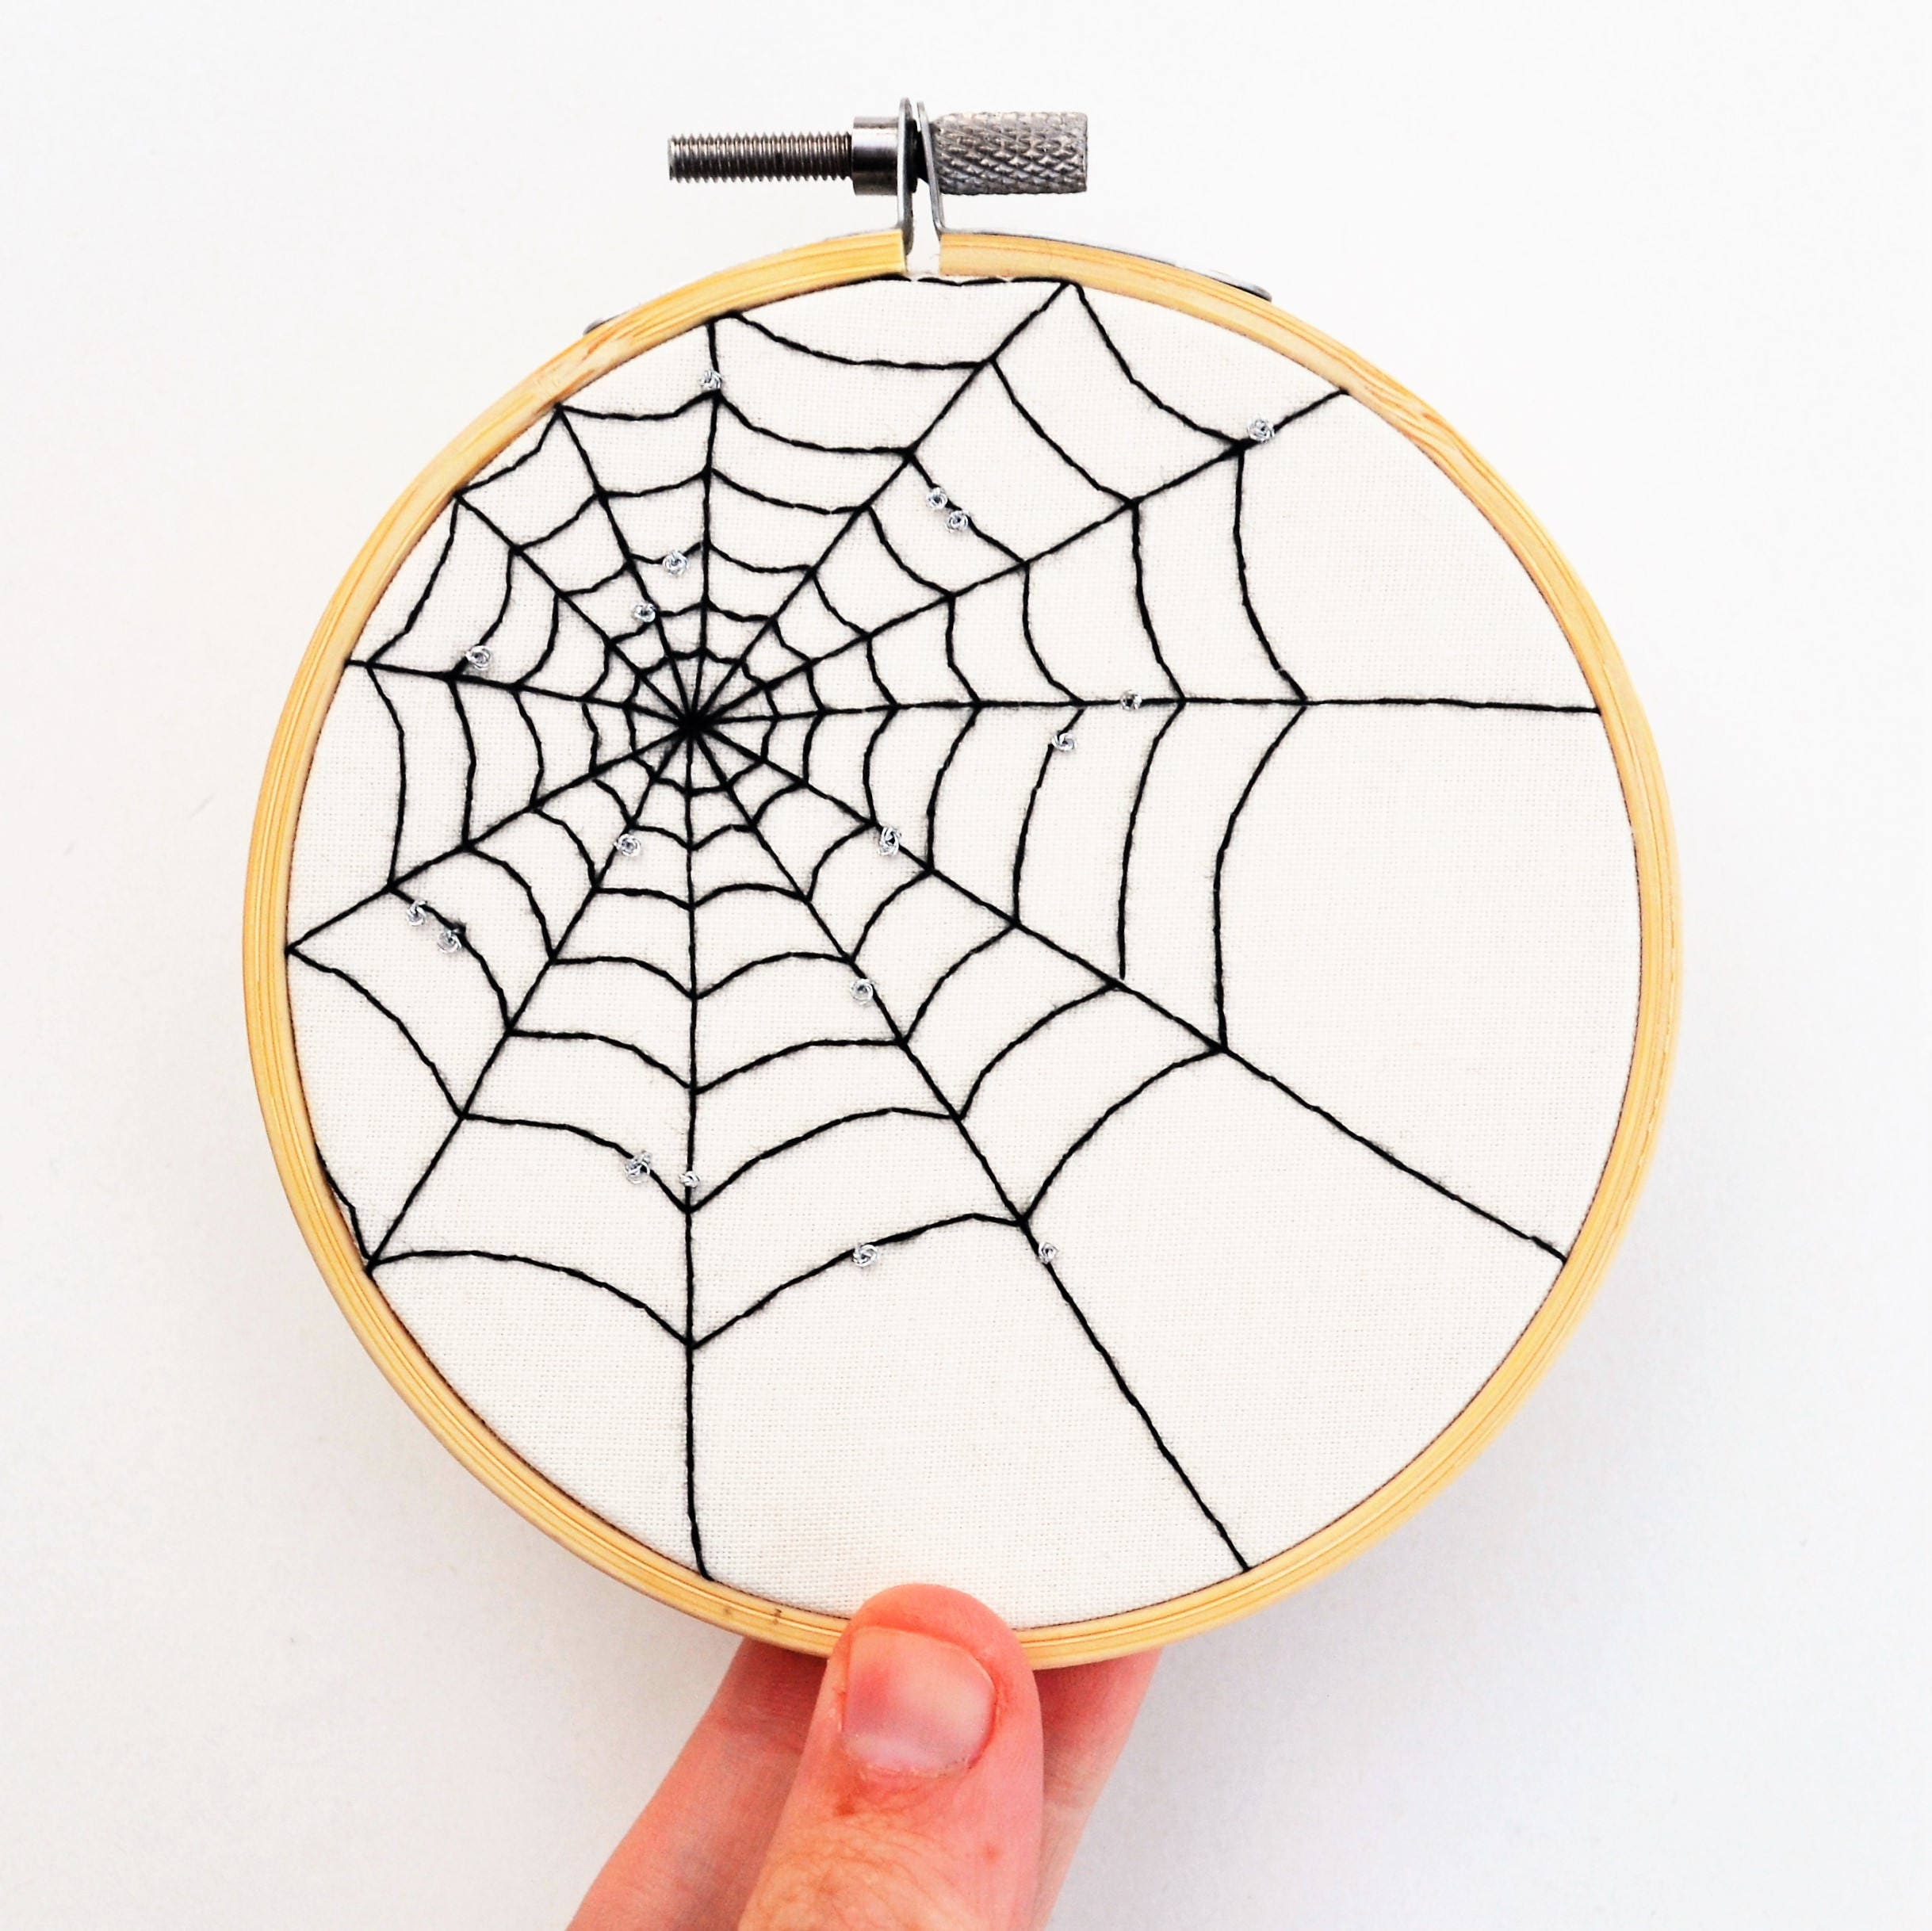 Halloween Door Hanger Finished Item Cross Stitch Mini Pillow Spider in Spiderweb